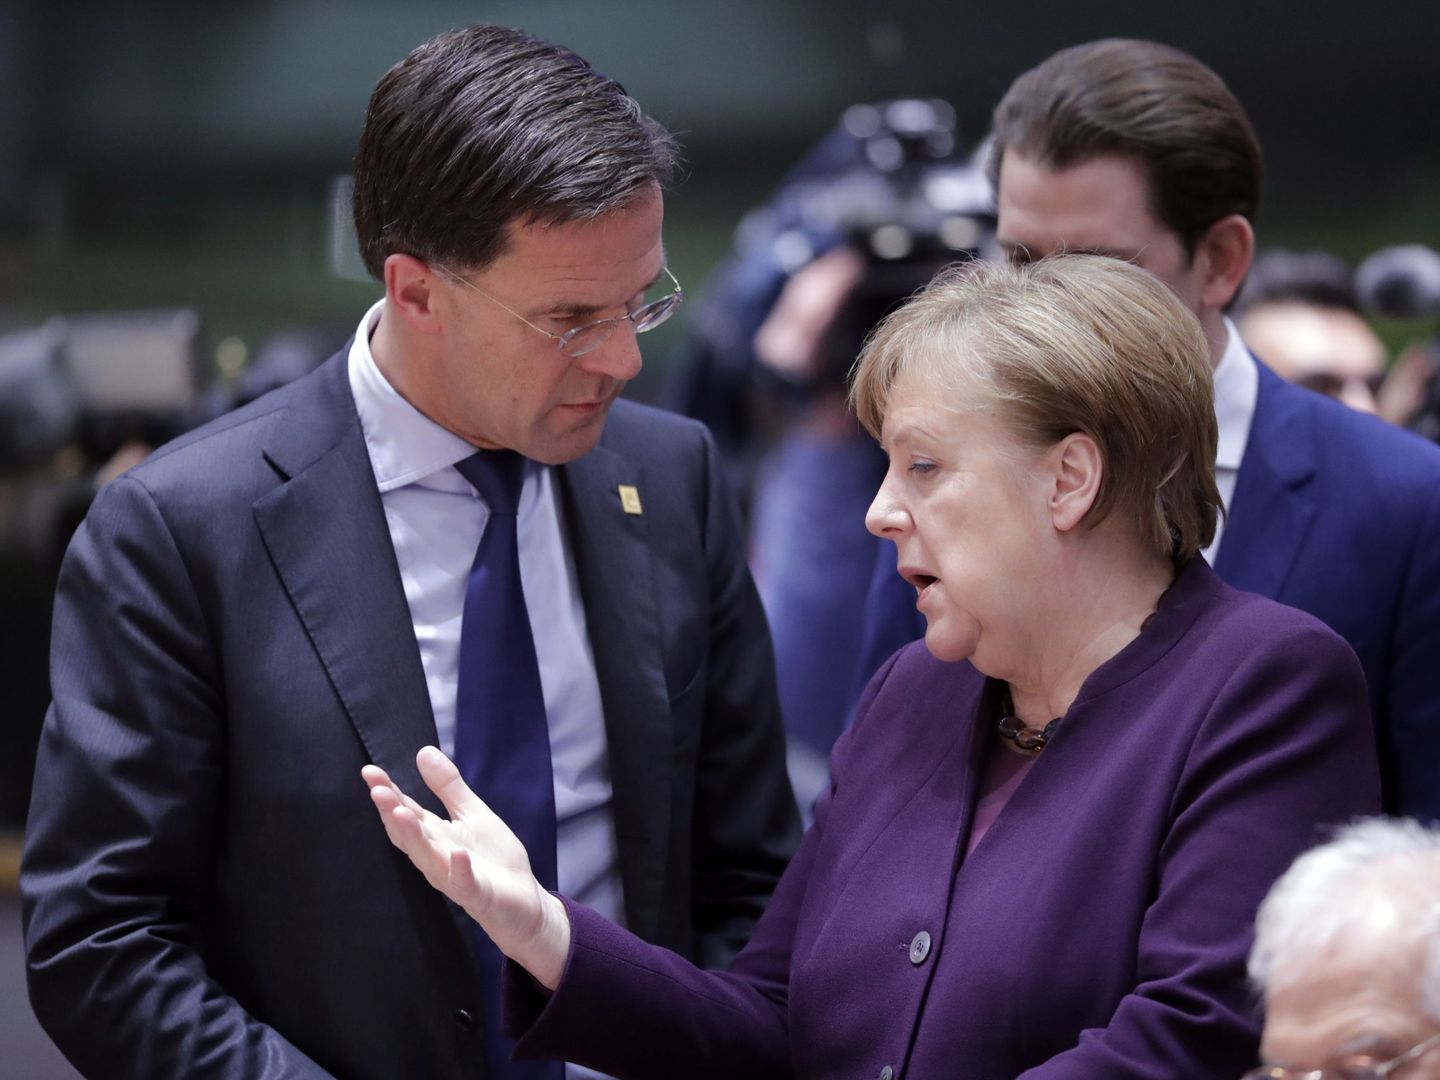 El primer ministro holandés escucha a la canciller alemana durant una de las últimas cumbre presenciales. (EFE)